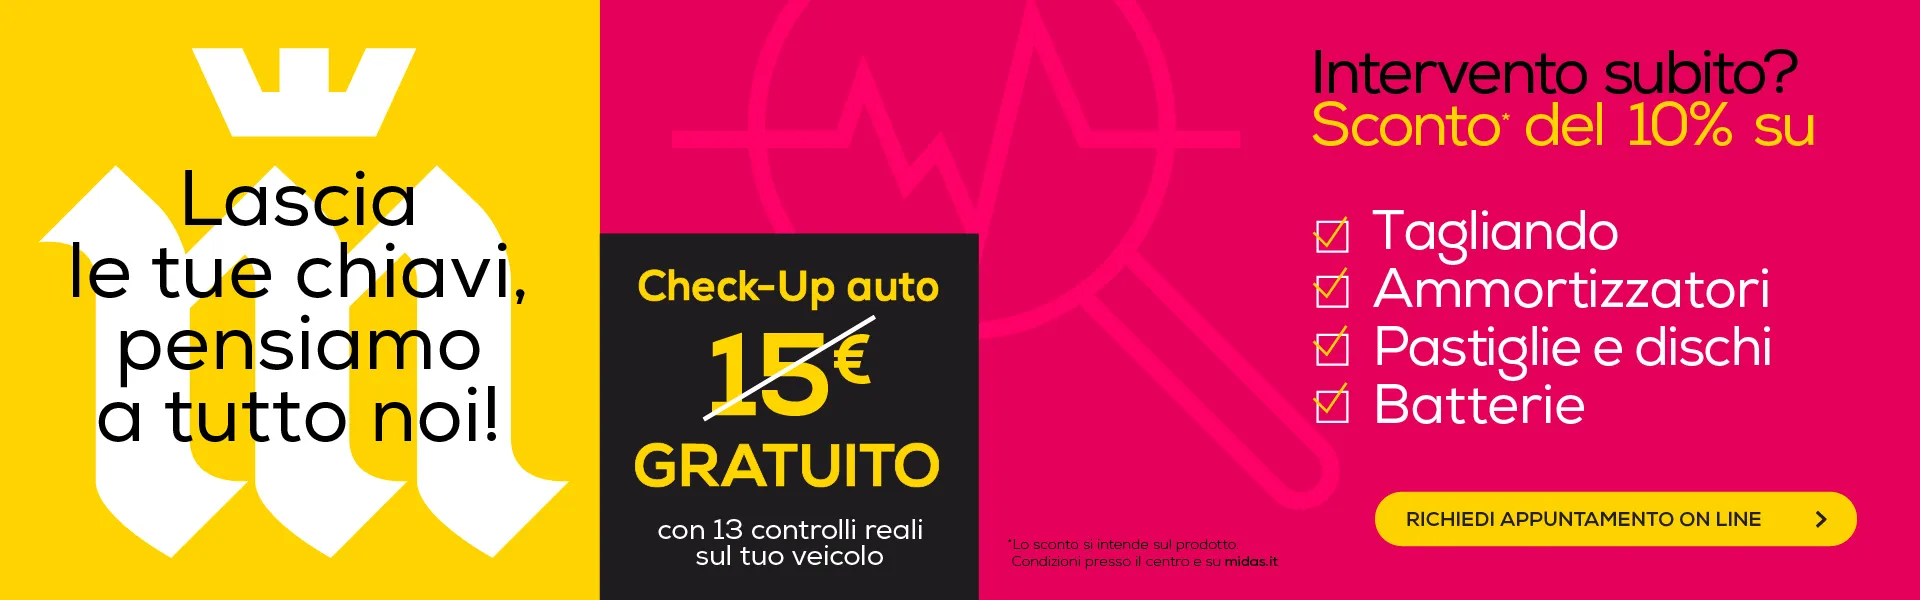 check-up_gratuito_e_sconto_10_1